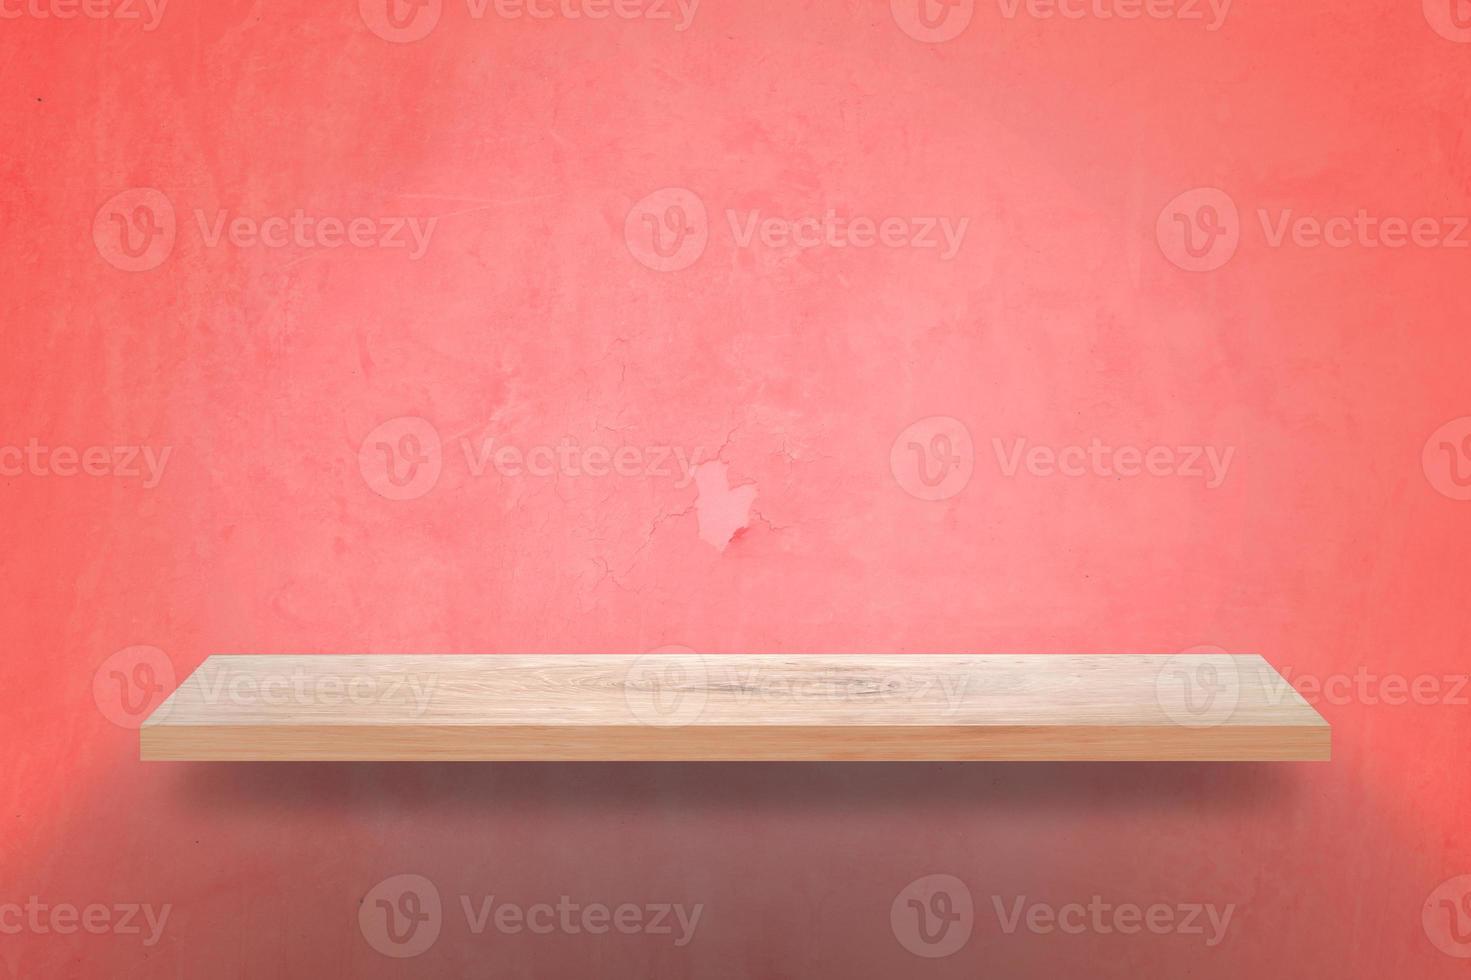 leeg hout plank met grunge roze muur achtergrond foto